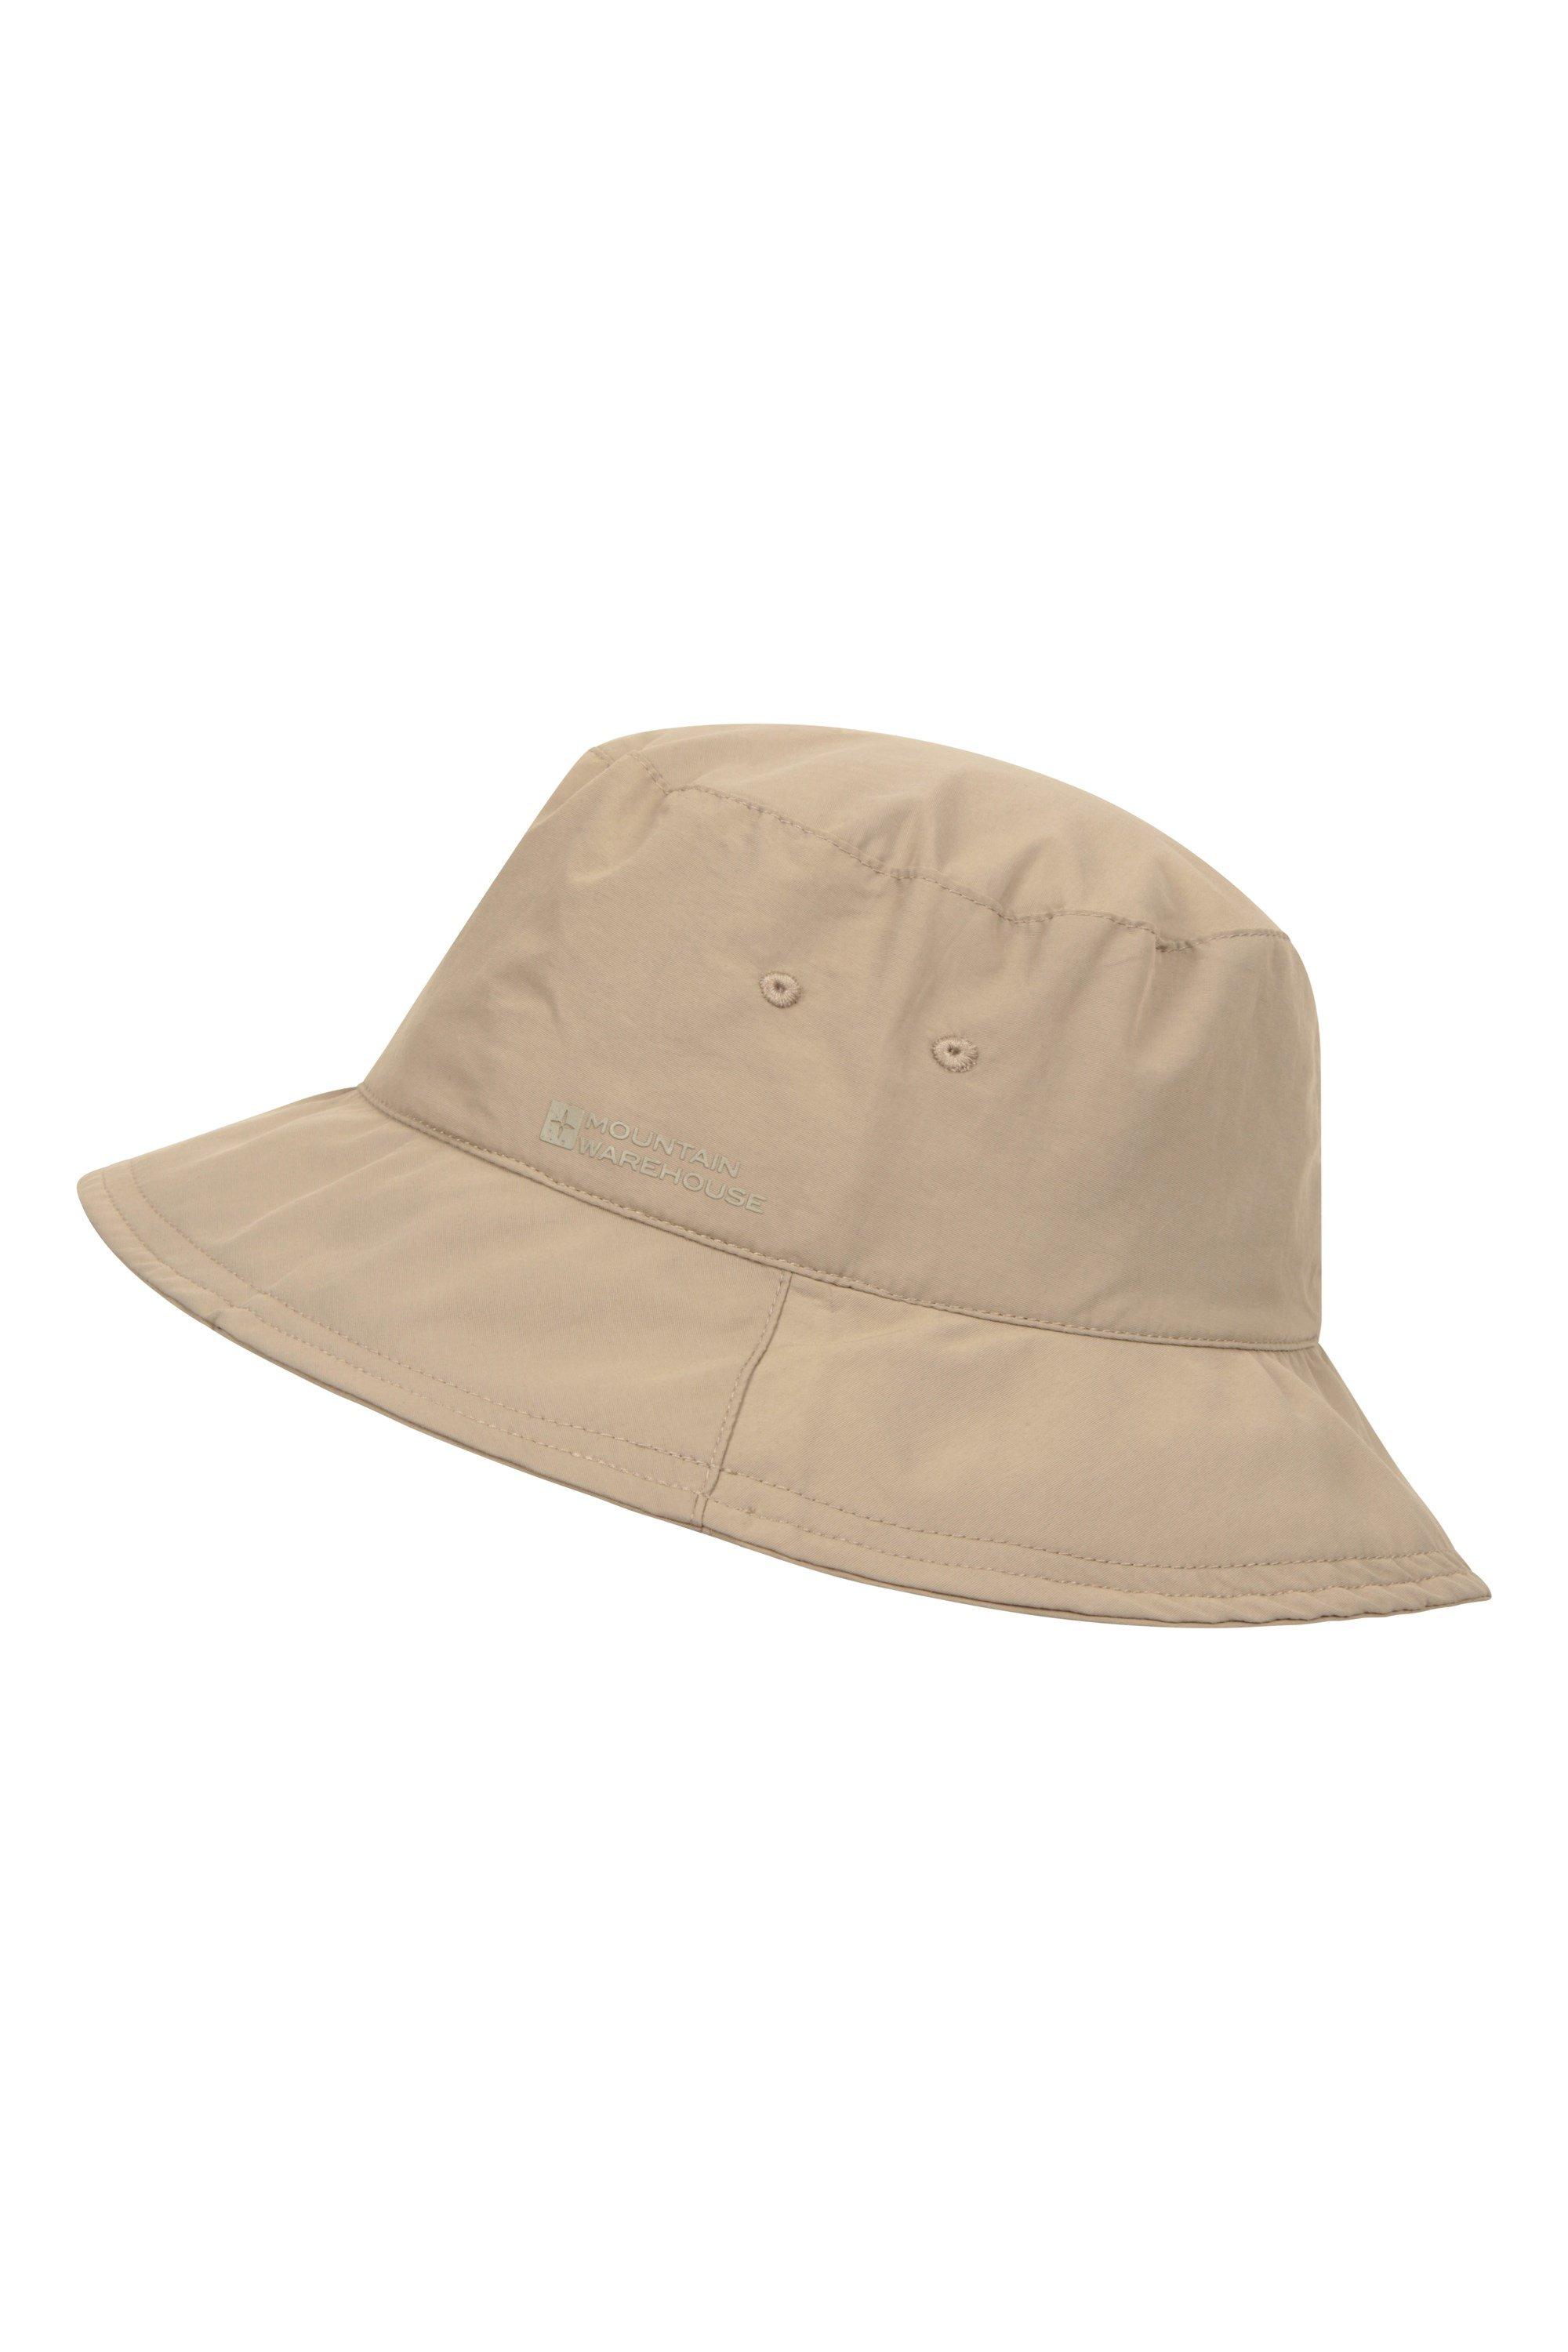 Outdoor Cap Bh-500 Cotton Twill Bucket - Khaki, L/XL